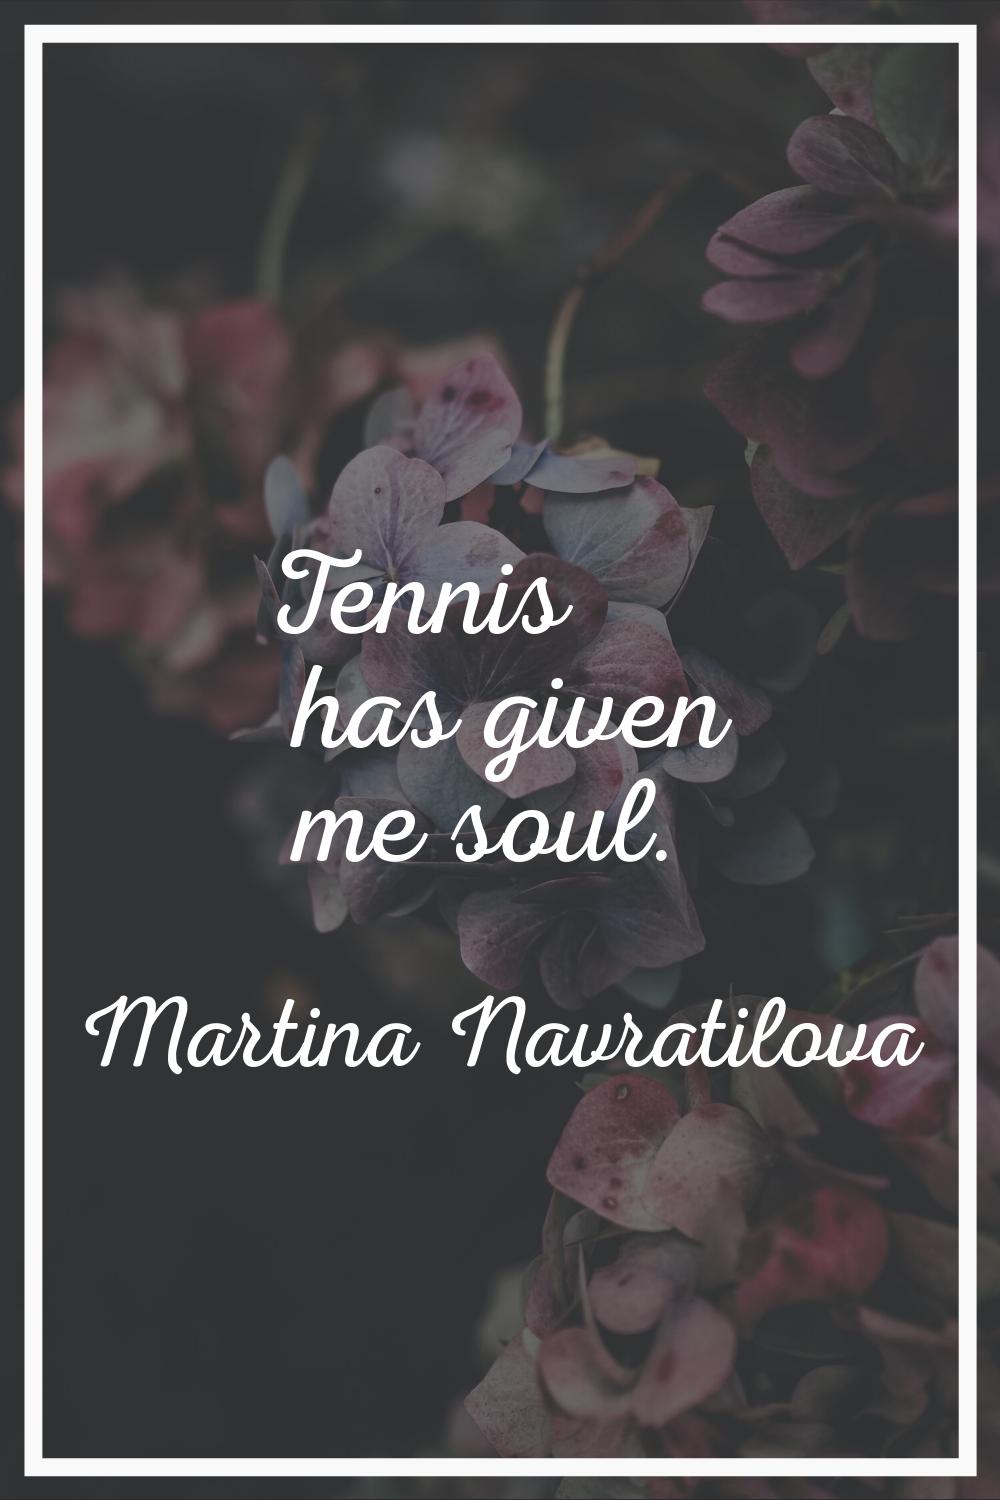 Tennis has given me soul.